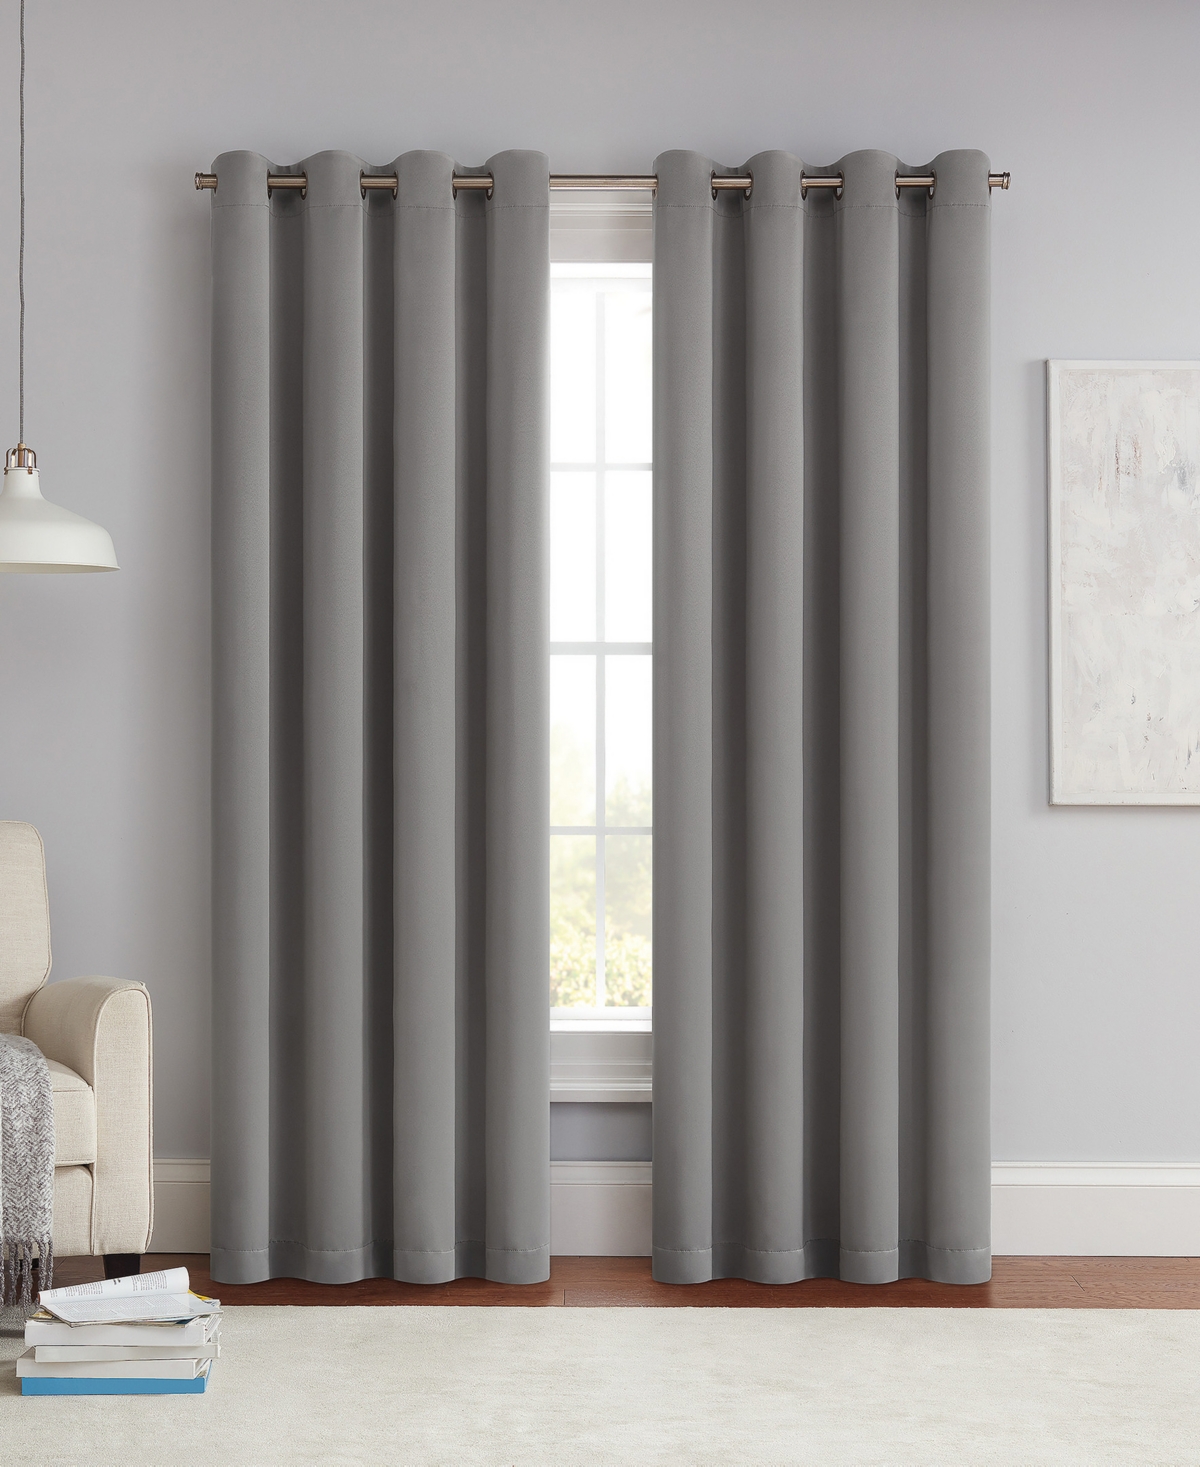 Solid Thermapanel Grommet Energy Saving Room Darkening Curtain Panel, 63" x 54" - Gray